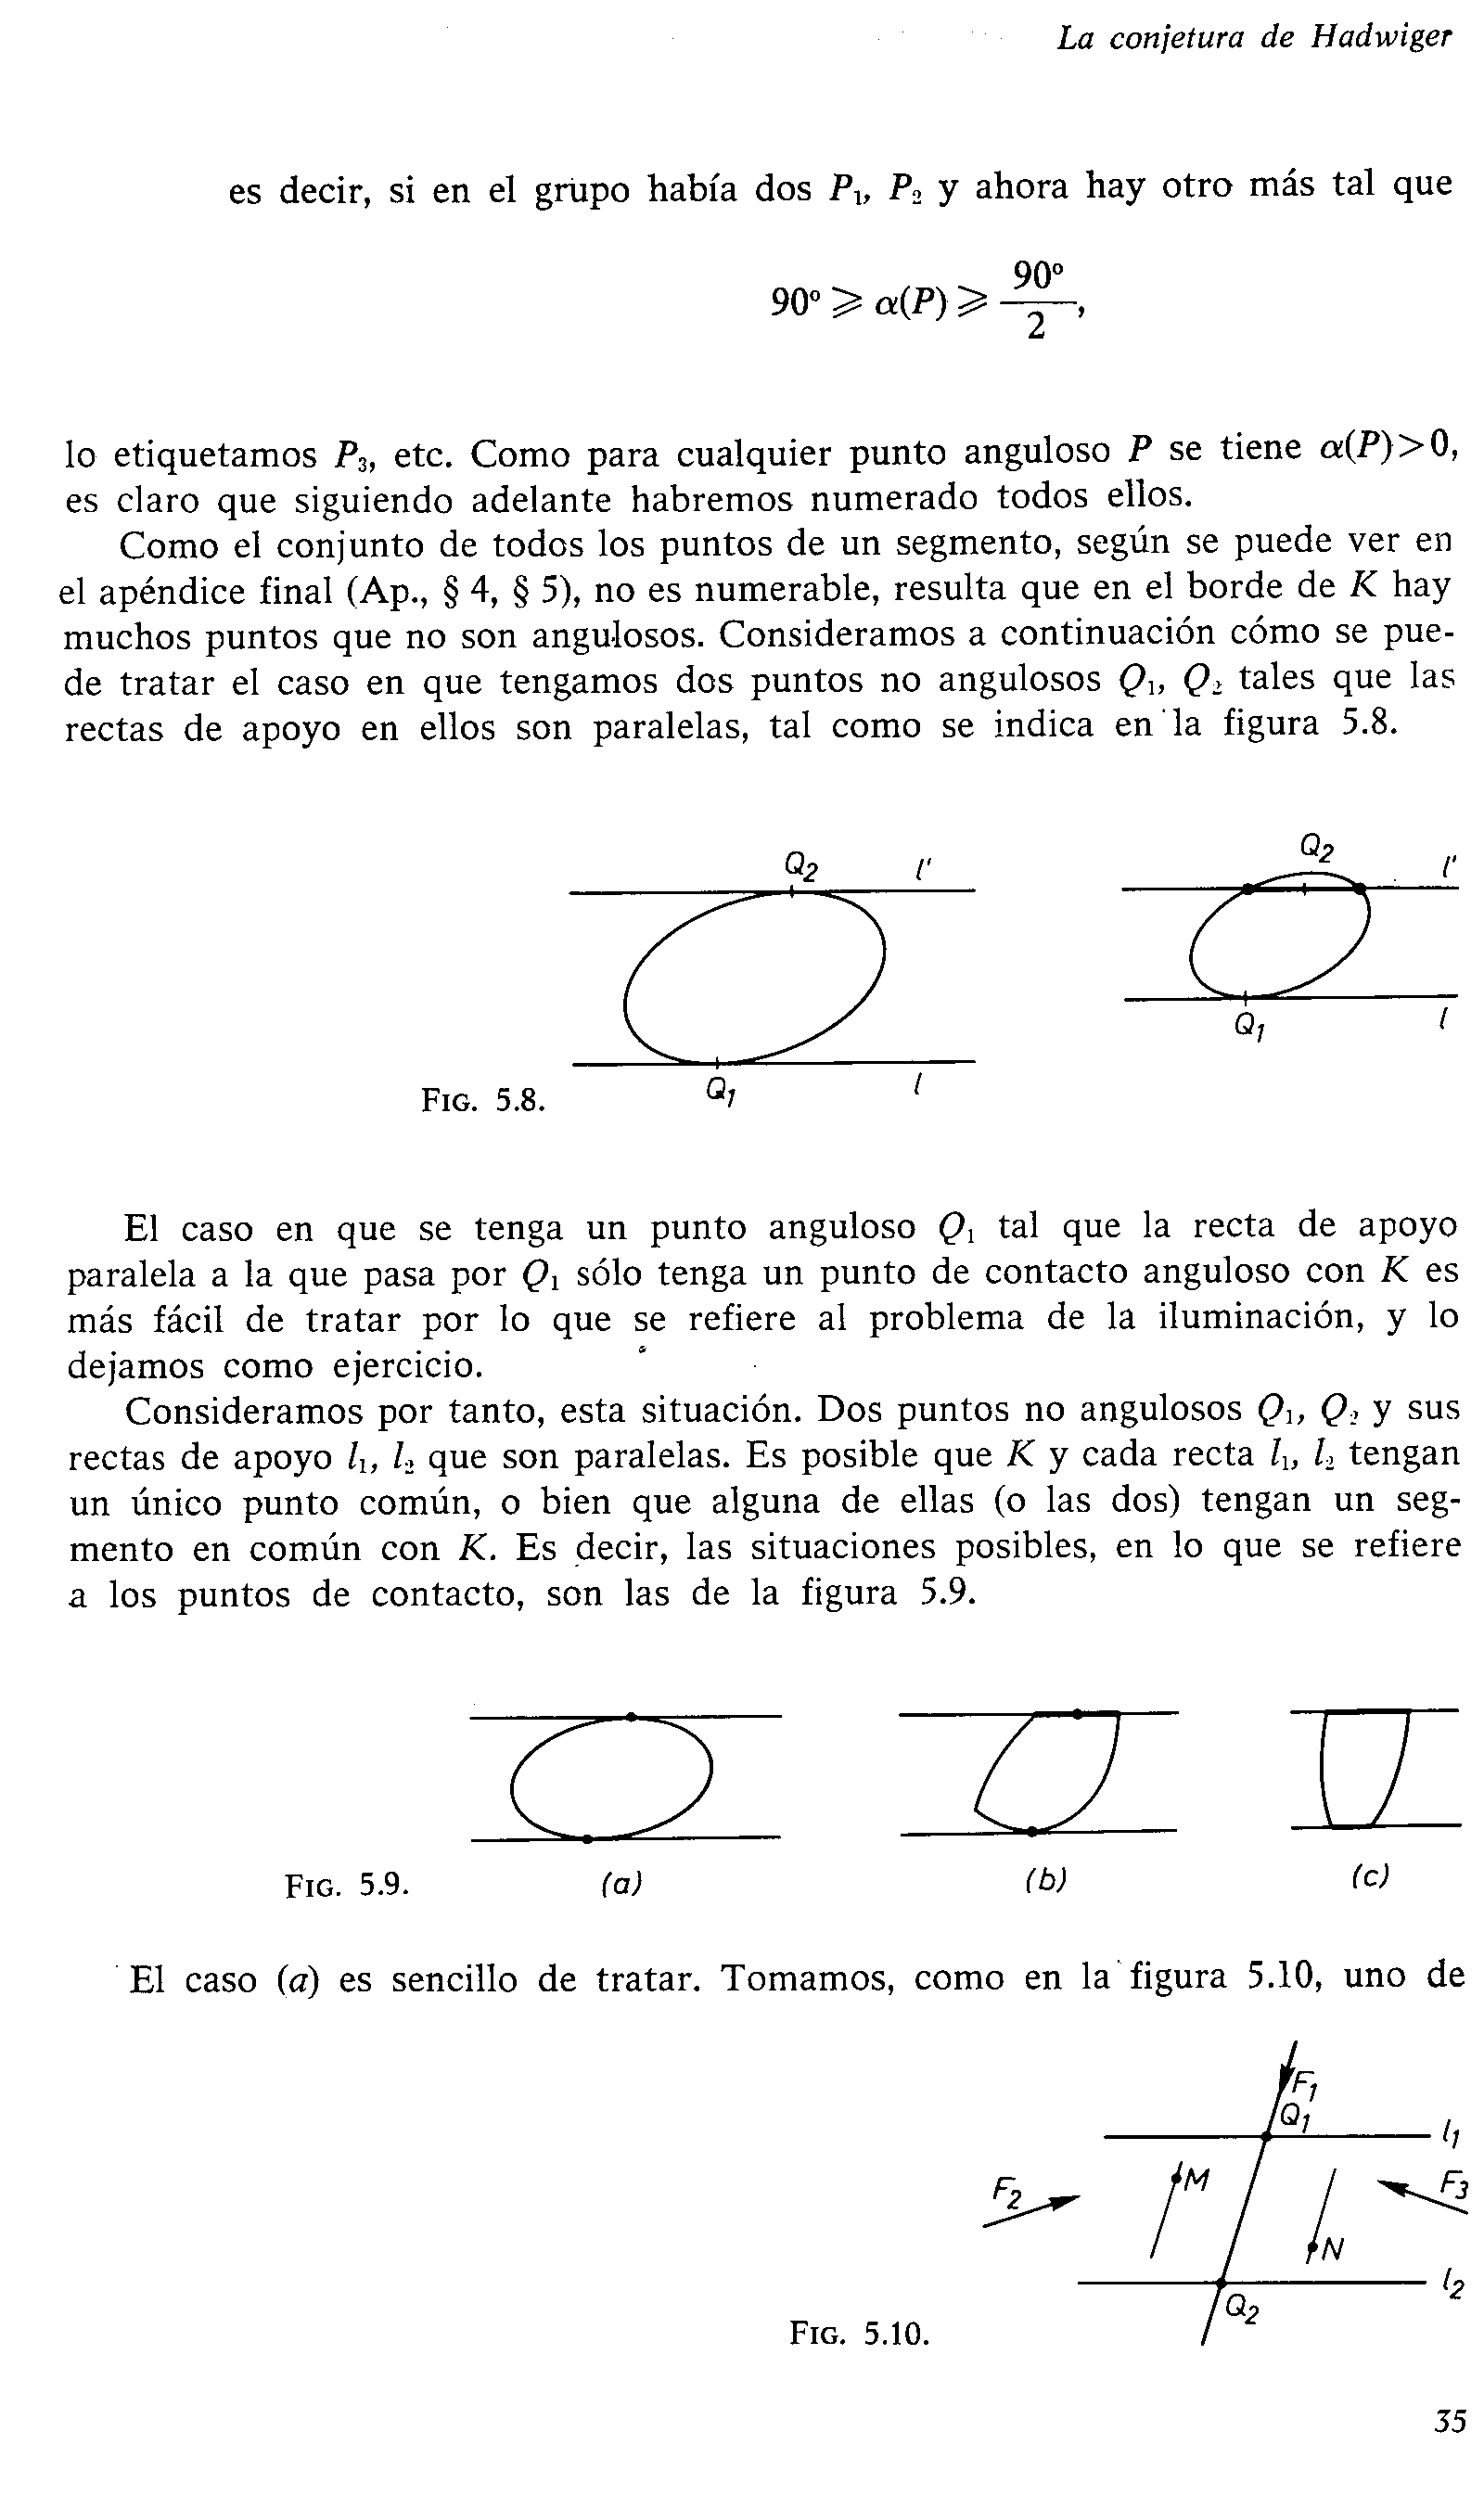 Graphics (p.9-1)